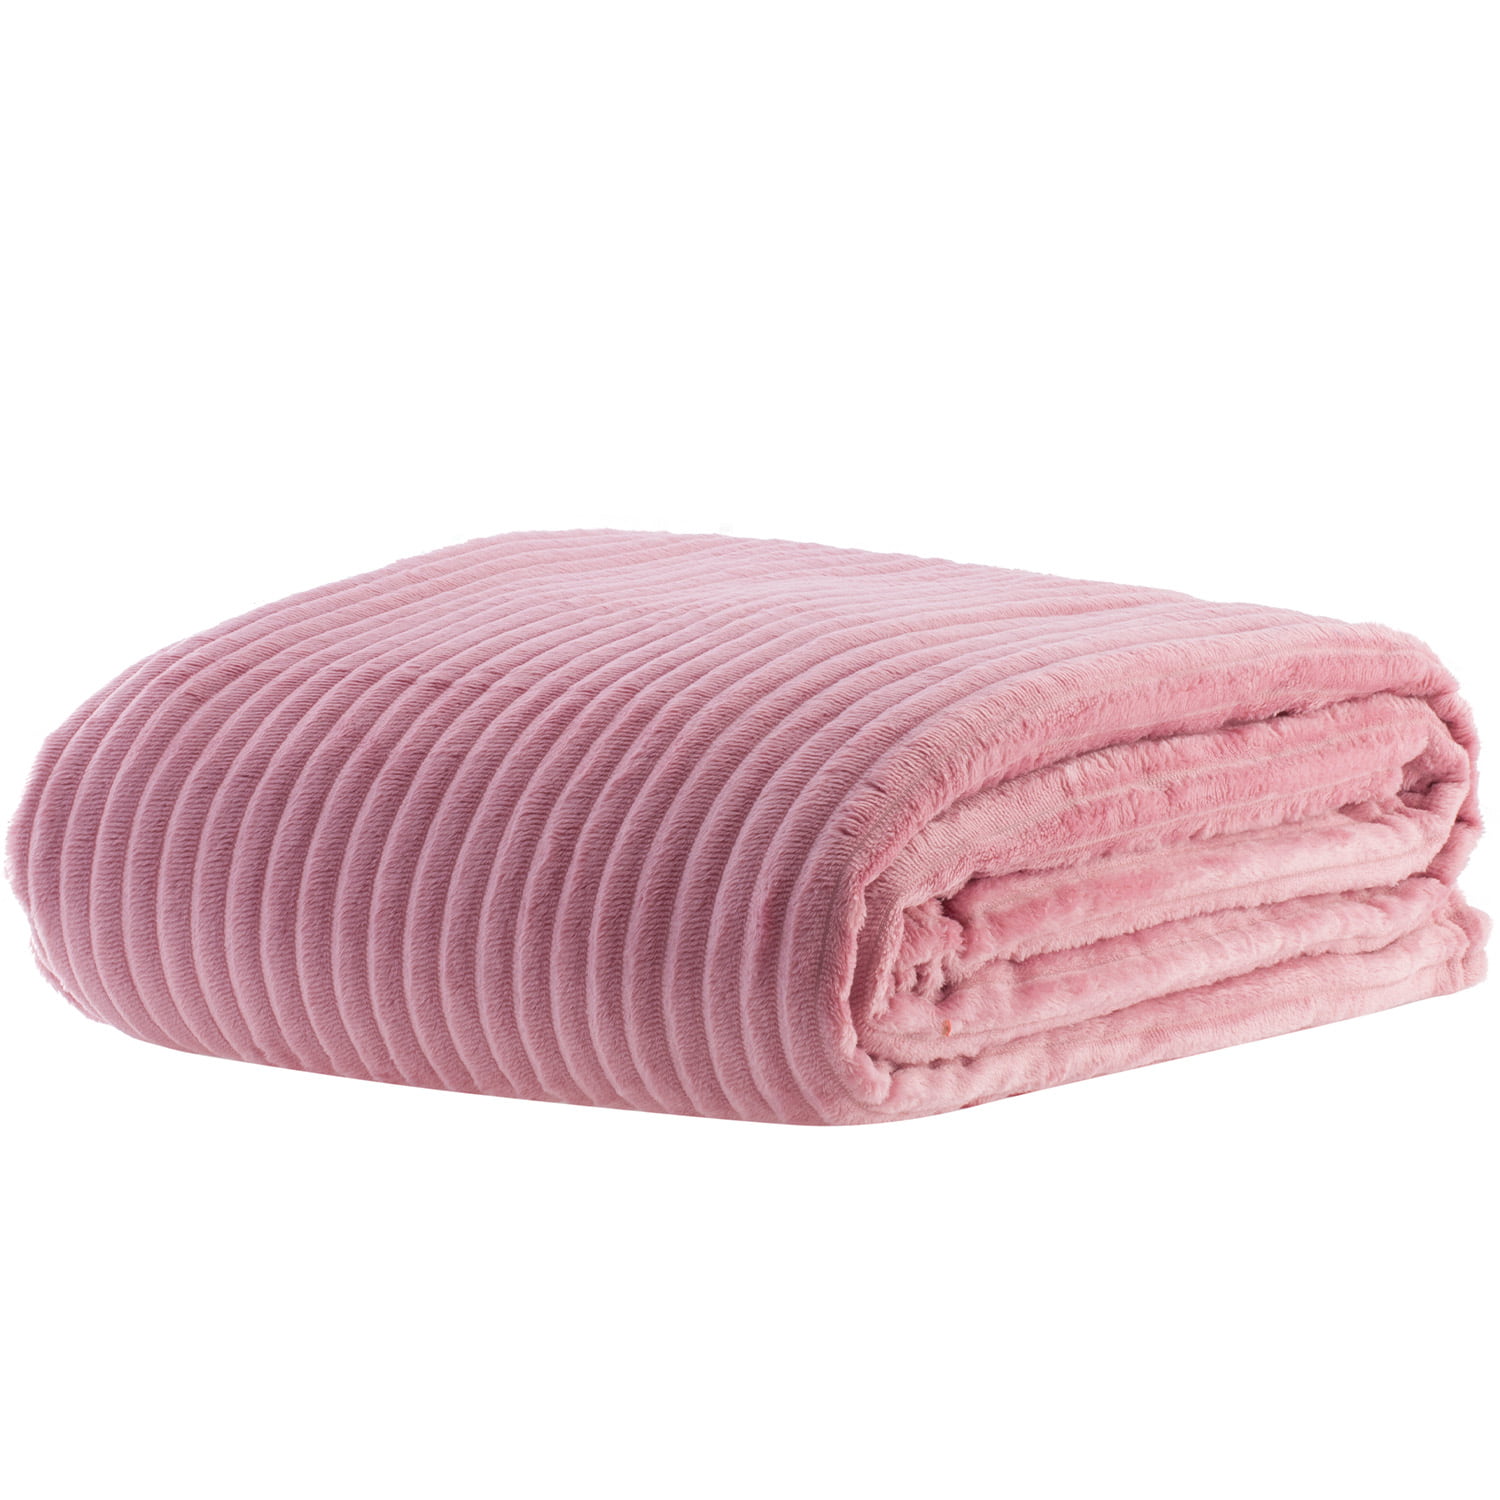 Manta Cobertor Casal Canelado Premium Londres Liso 180x220cm - Rosa